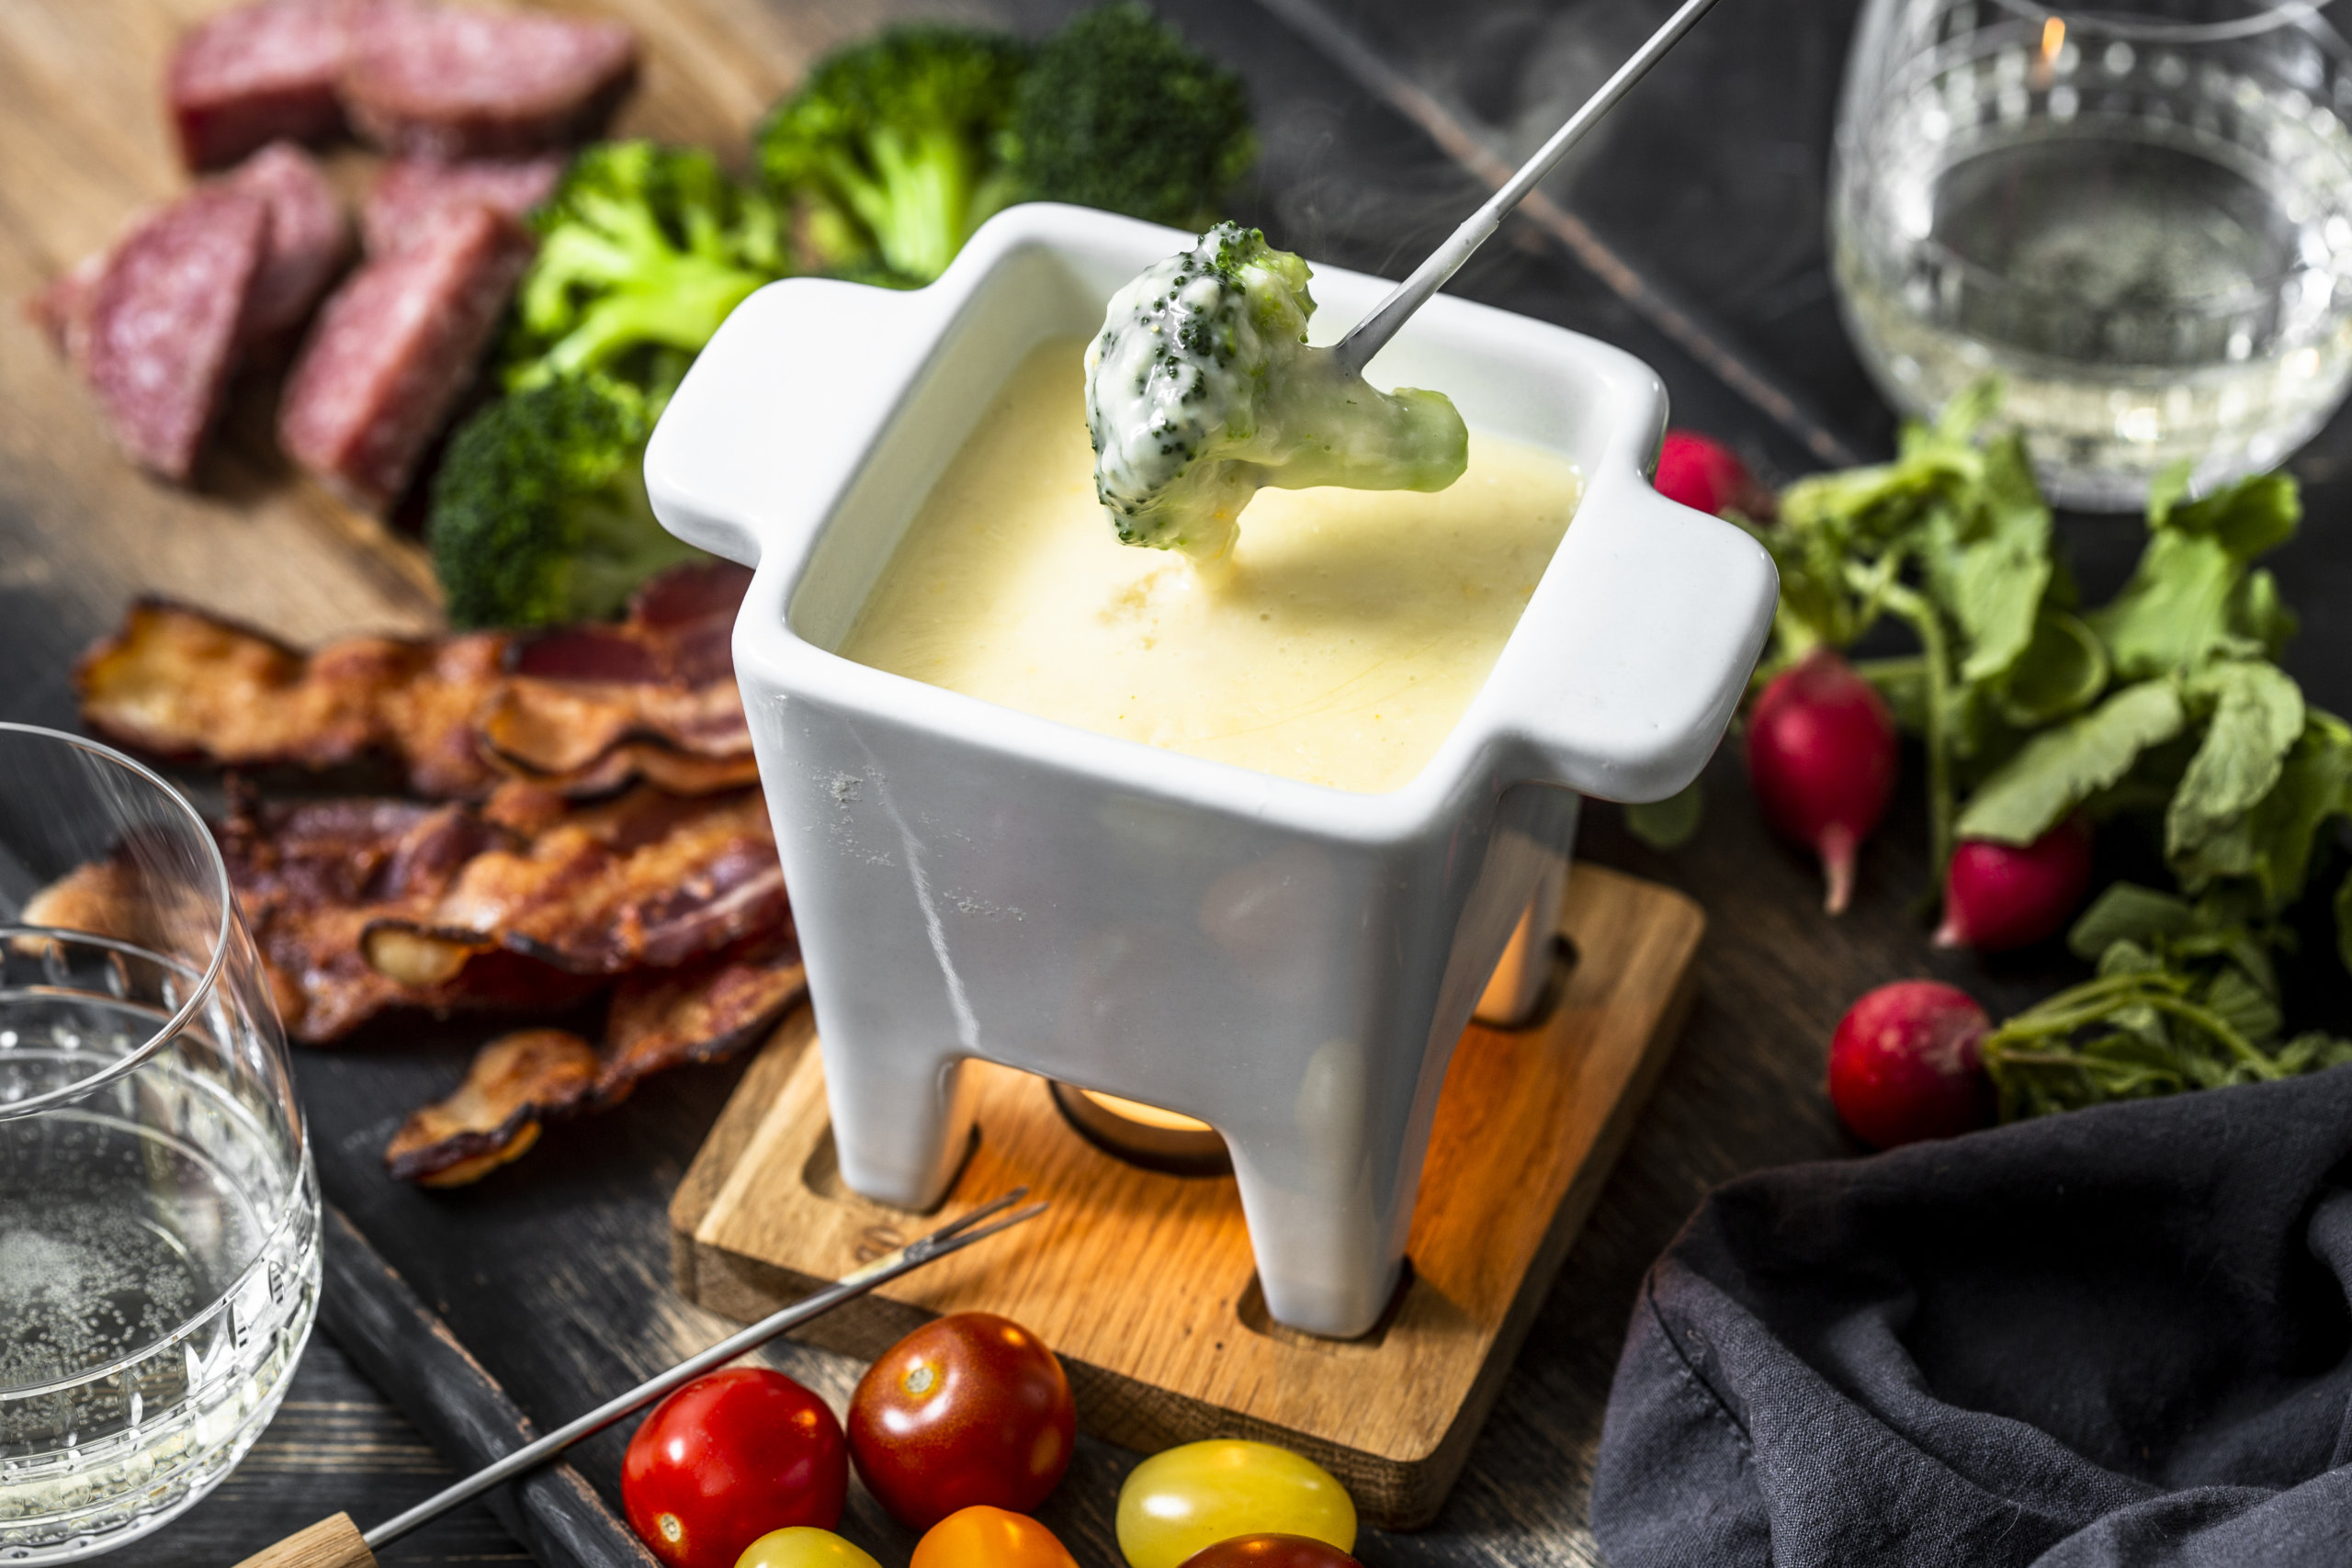 Keto-Mojo cheese fondue with meat and veggies